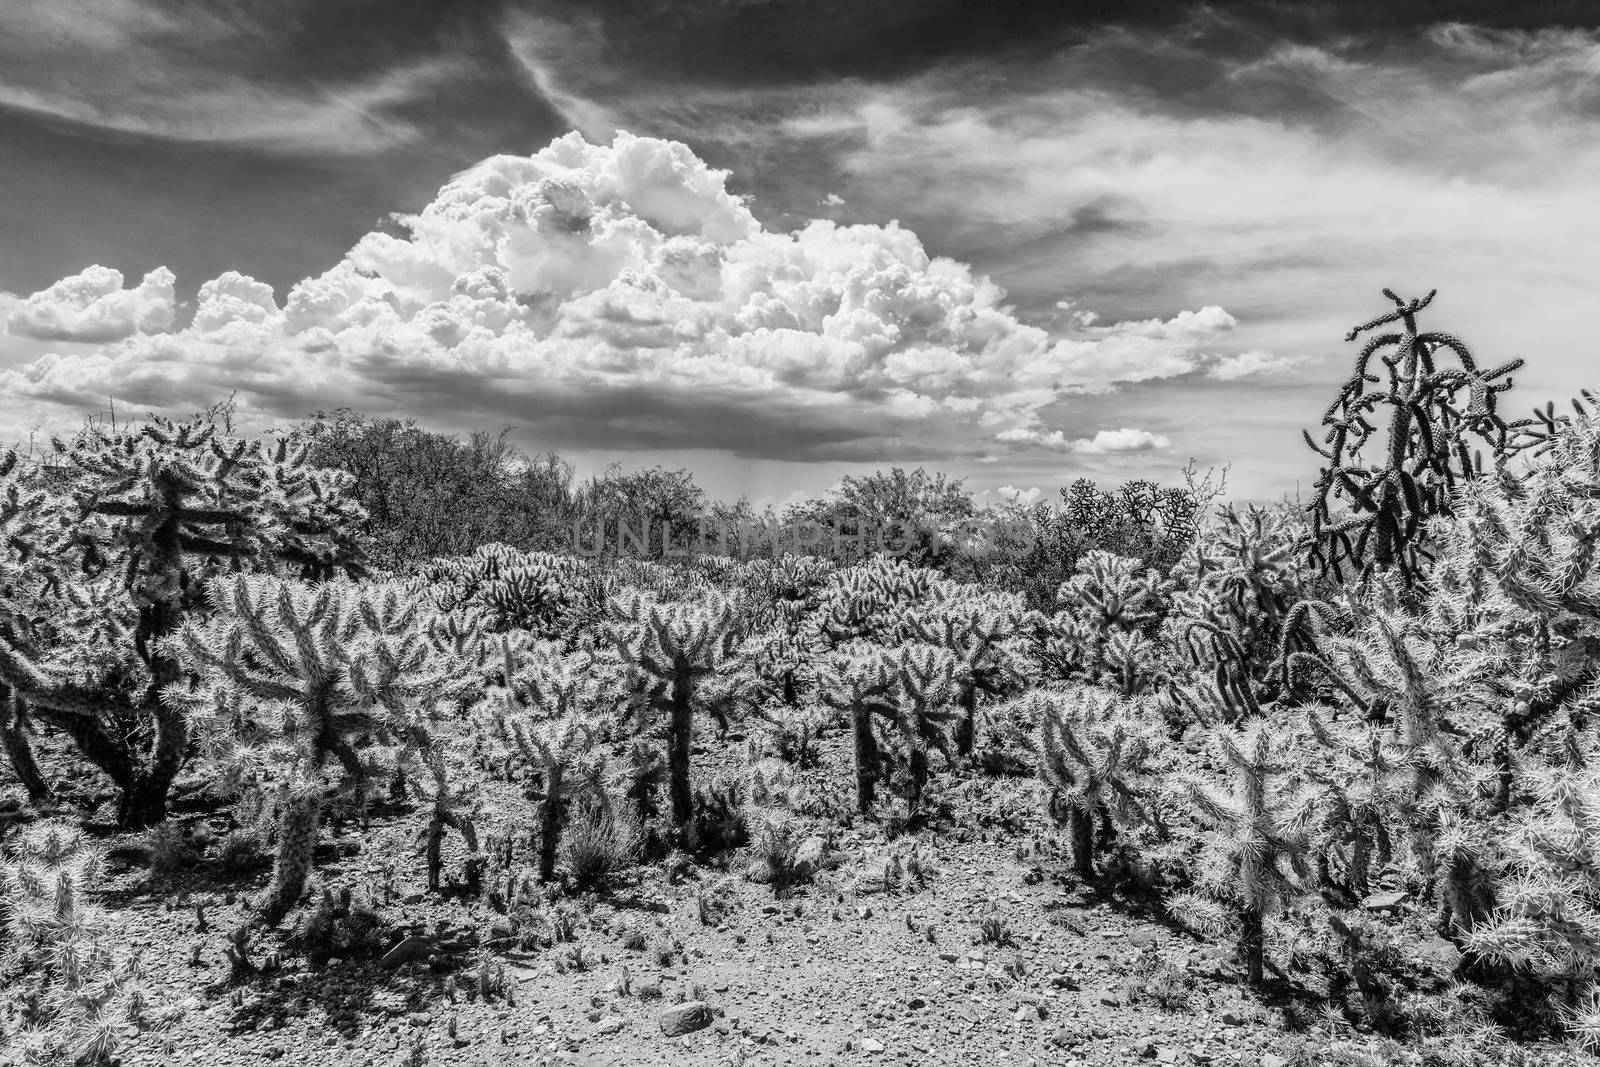 Cactus Shrubs in Desert by Creatista